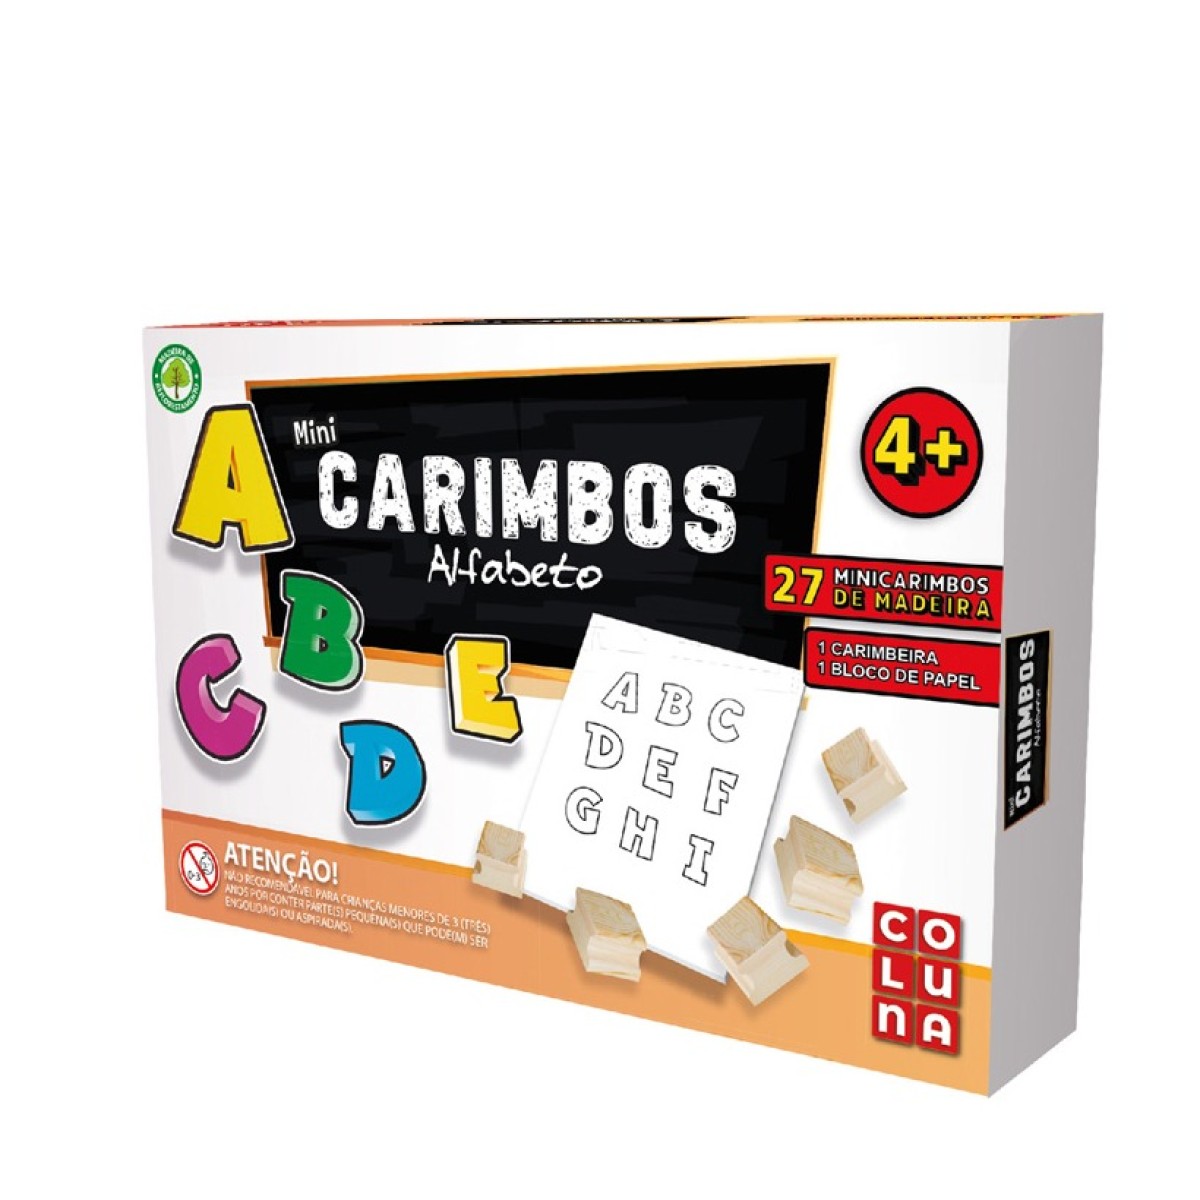 Mini carimbos alfabeto - madeira-790735-76435